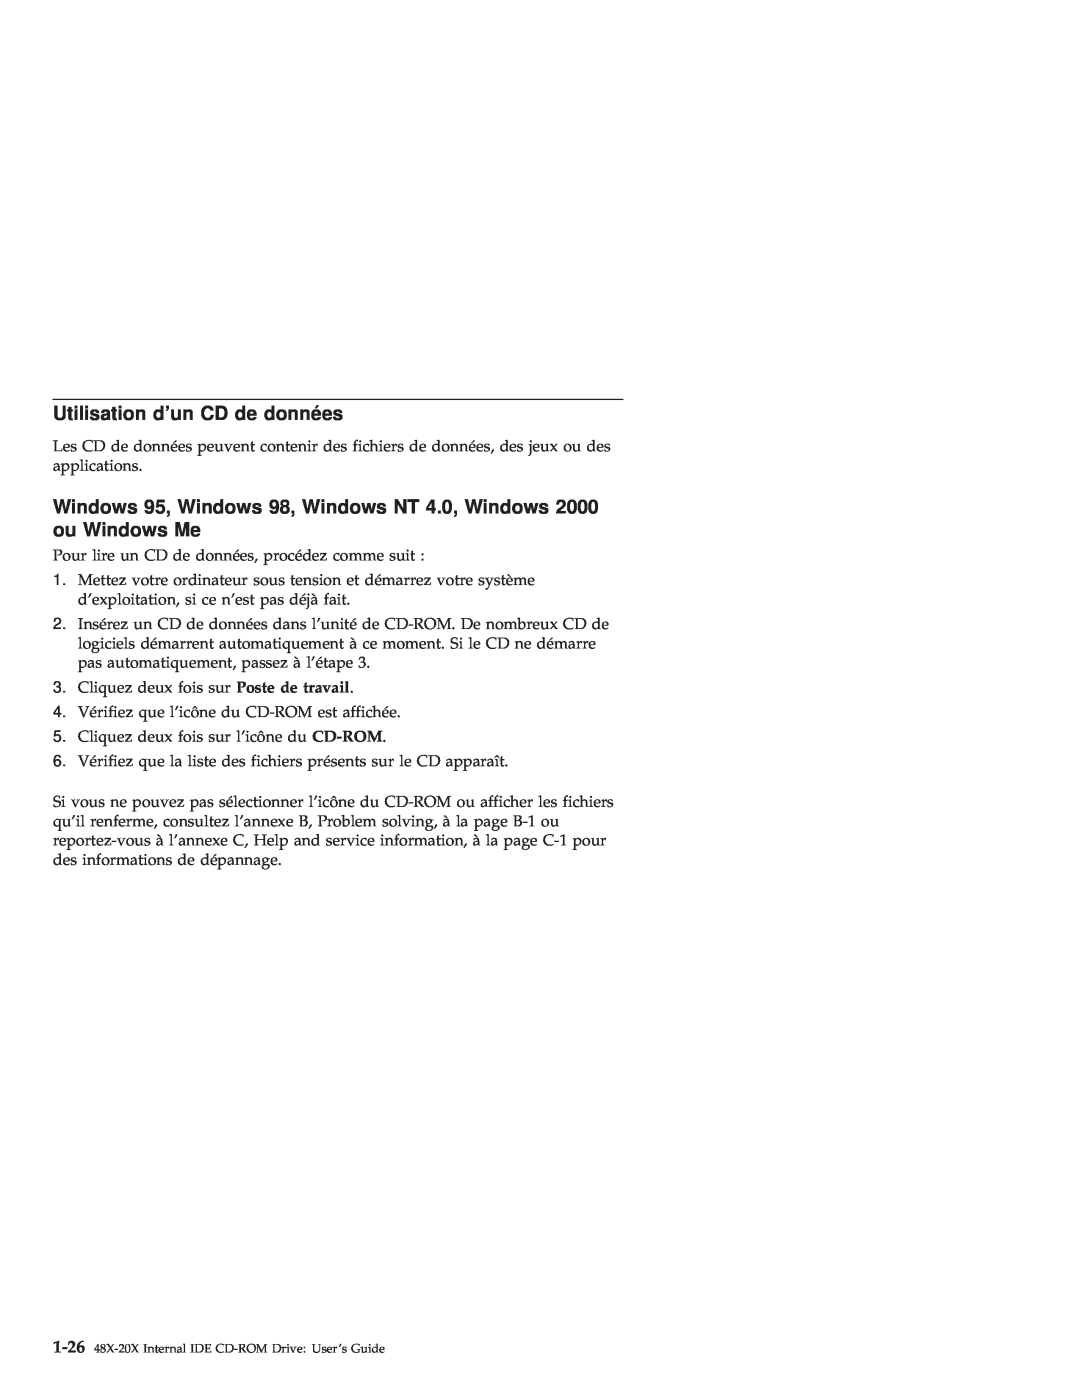 IBM 71P7279 manual Utilisation dun CD de données, Windows 95, Windows 98, Windows NT 4.0, Windows 2000 ou Windows Me 